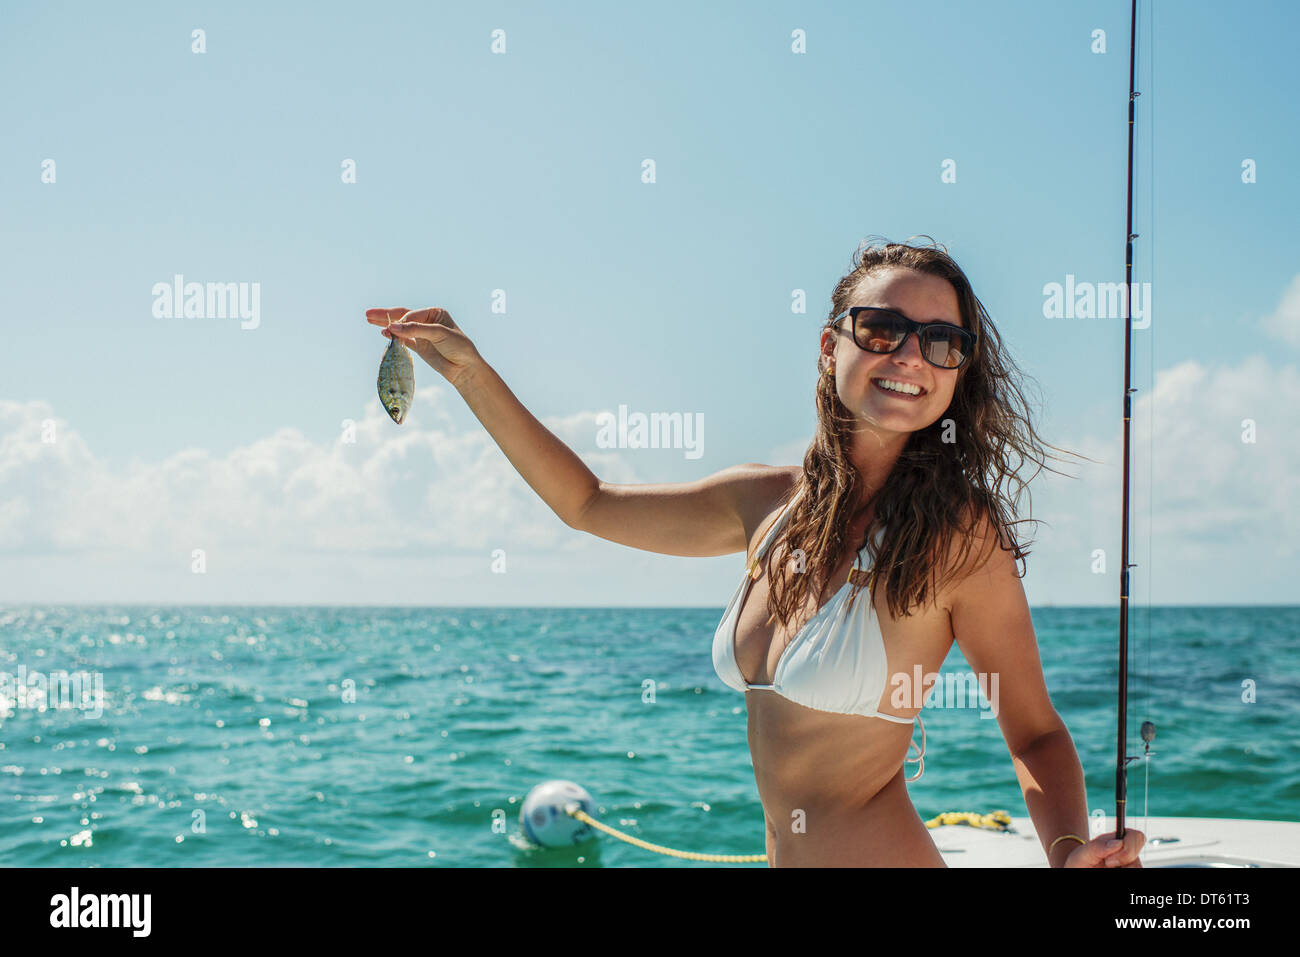 Young woman on boat holding fish, Islamorada, Florida Keys, USA Stock Photo